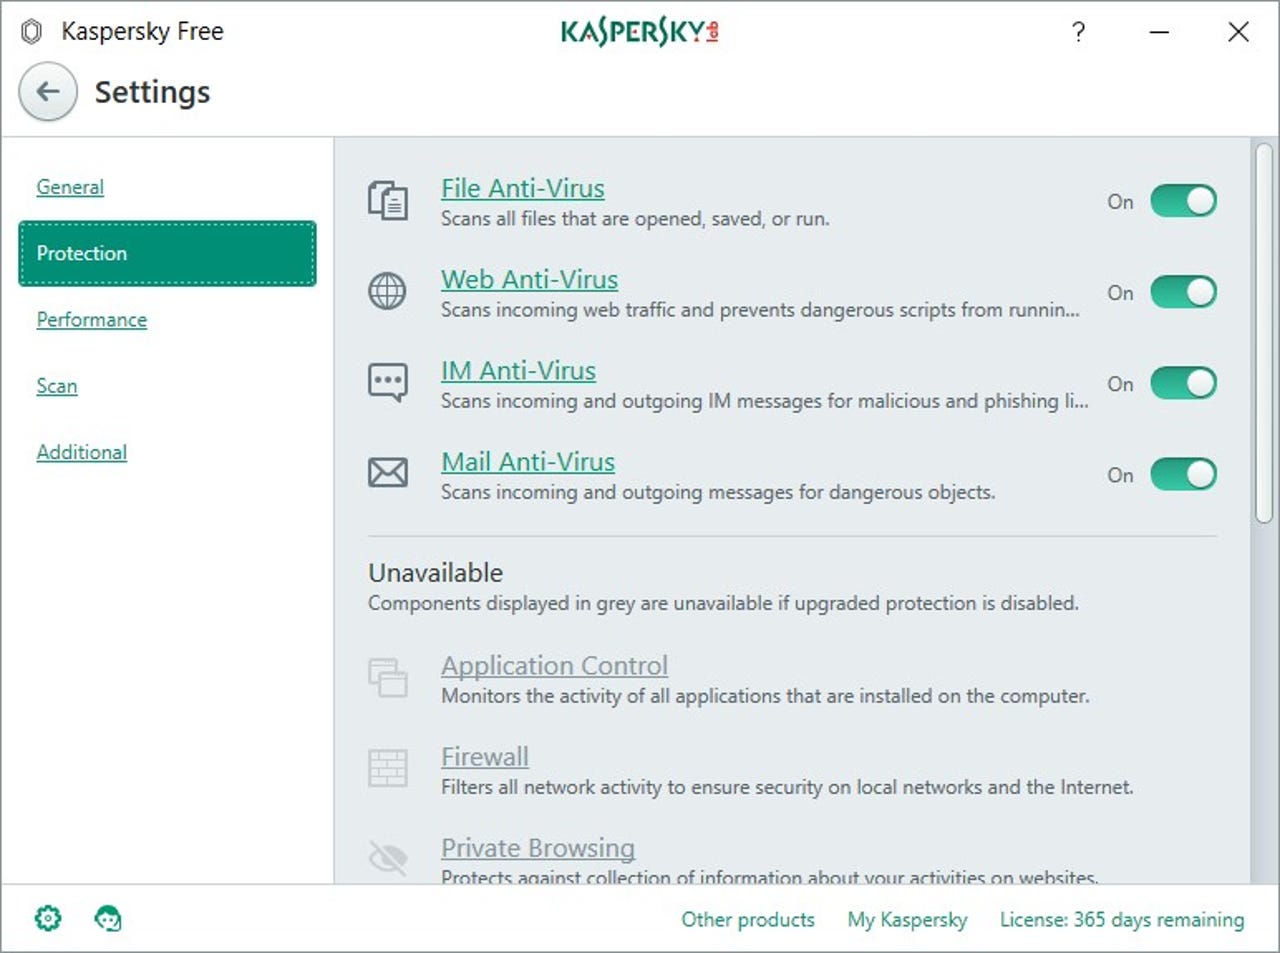 6. Kaspersky Free — Good Range of Free Features